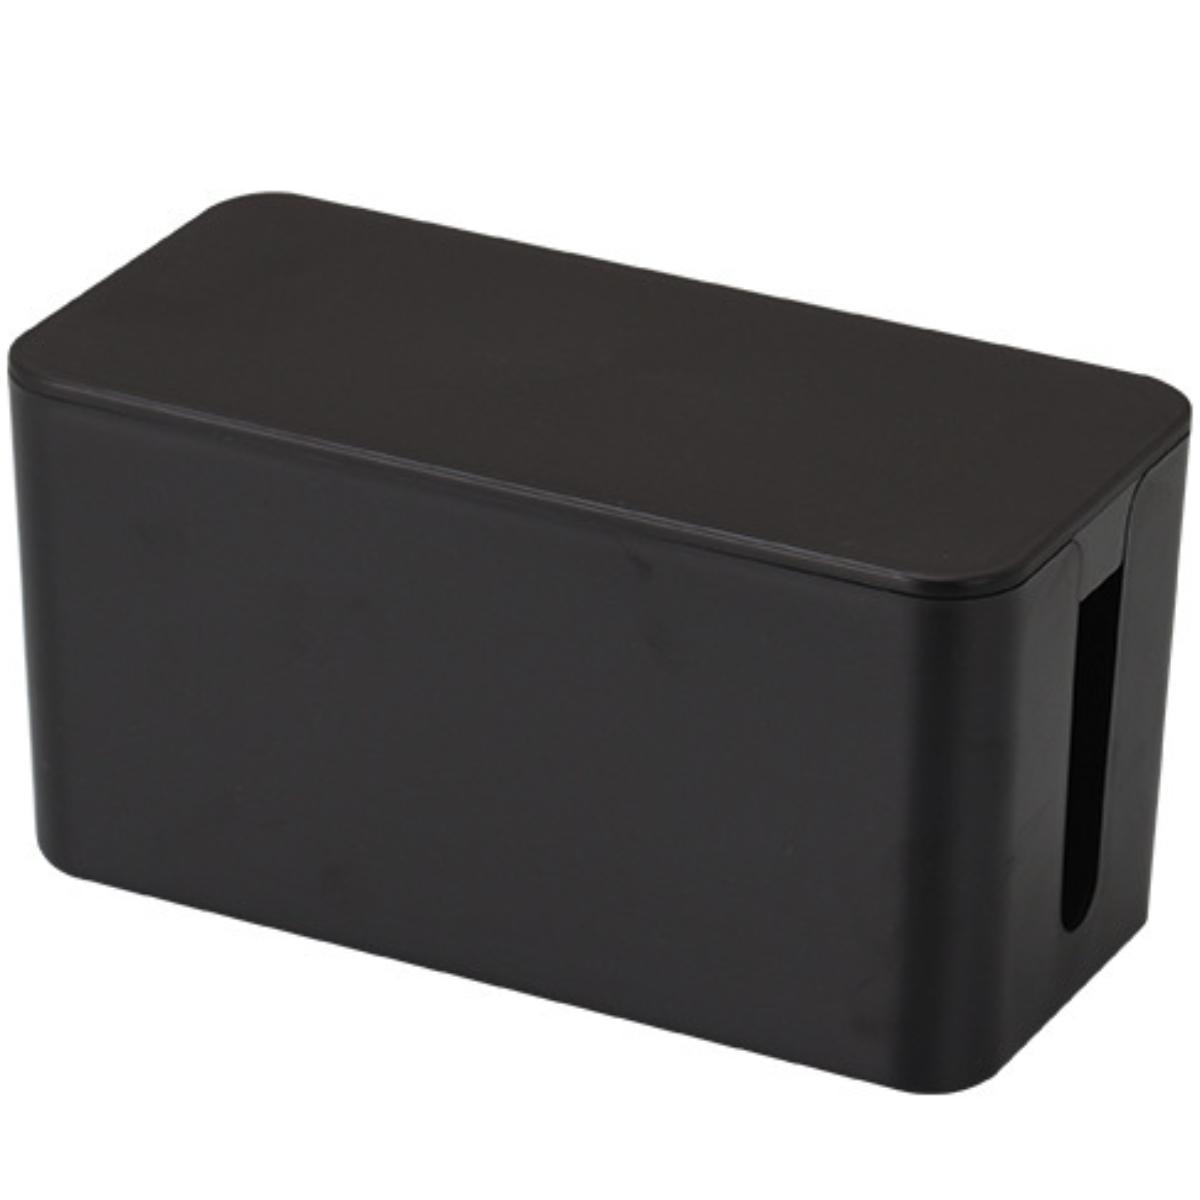 bovenste Gevoel Sada Kabelgoot - Kabel Box - Kunststof - Kabelbox Maxi - Zwart, Merk: Hama,  Lengte: 0.4 m, Breedte: 15.6 cm, Hoogte: 13.5 cm,